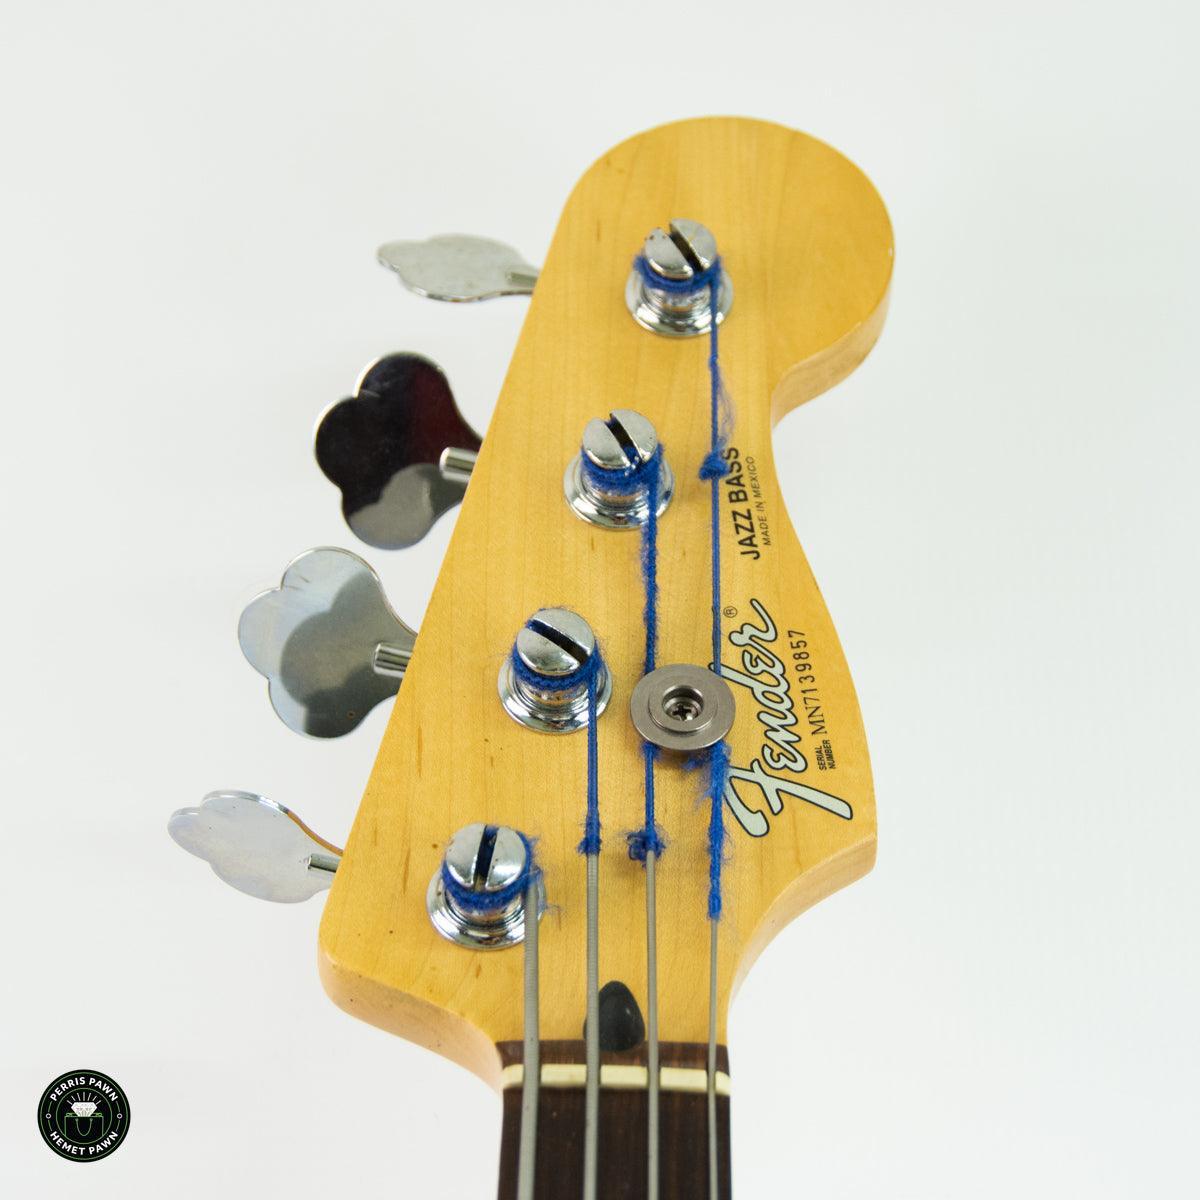 Fender Jazz Bass MIM - Hecho en Mexico - ipawnishop.com